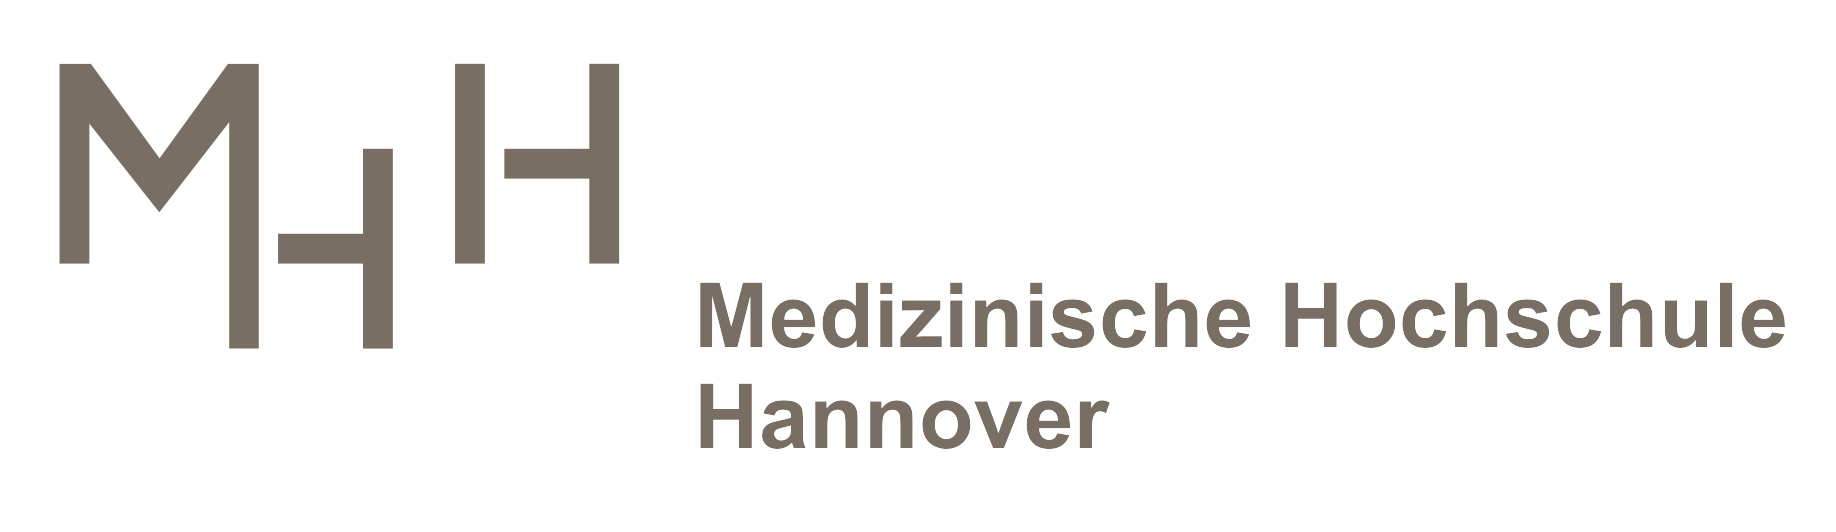 Hannover Medical School (MHH)  